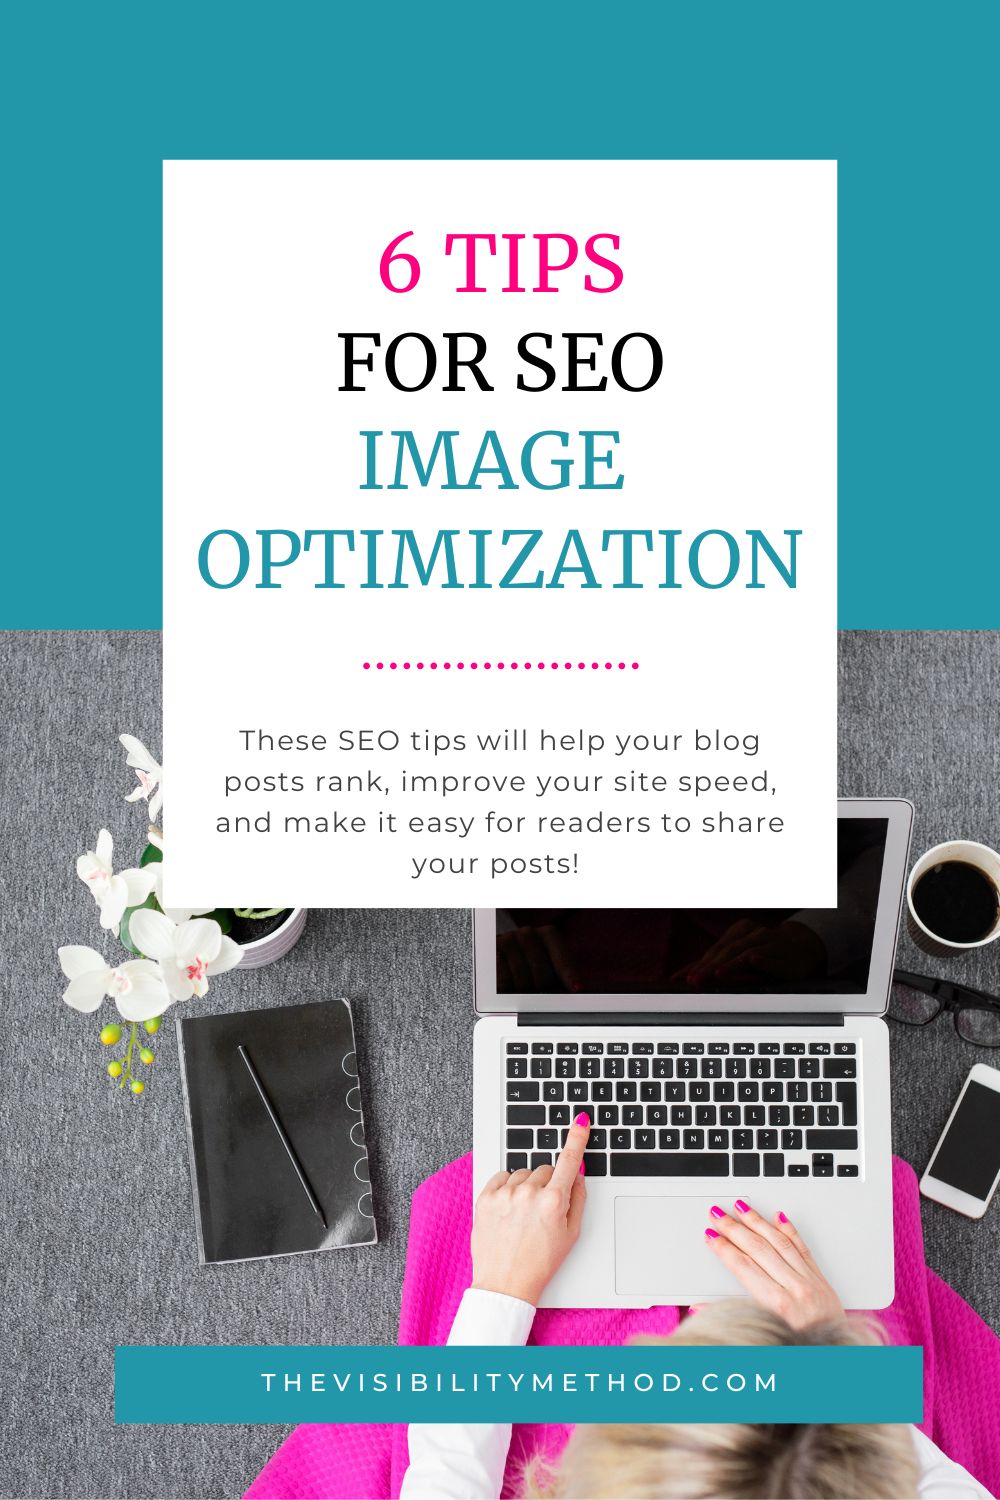 6 Tips for SEO Image Optimization